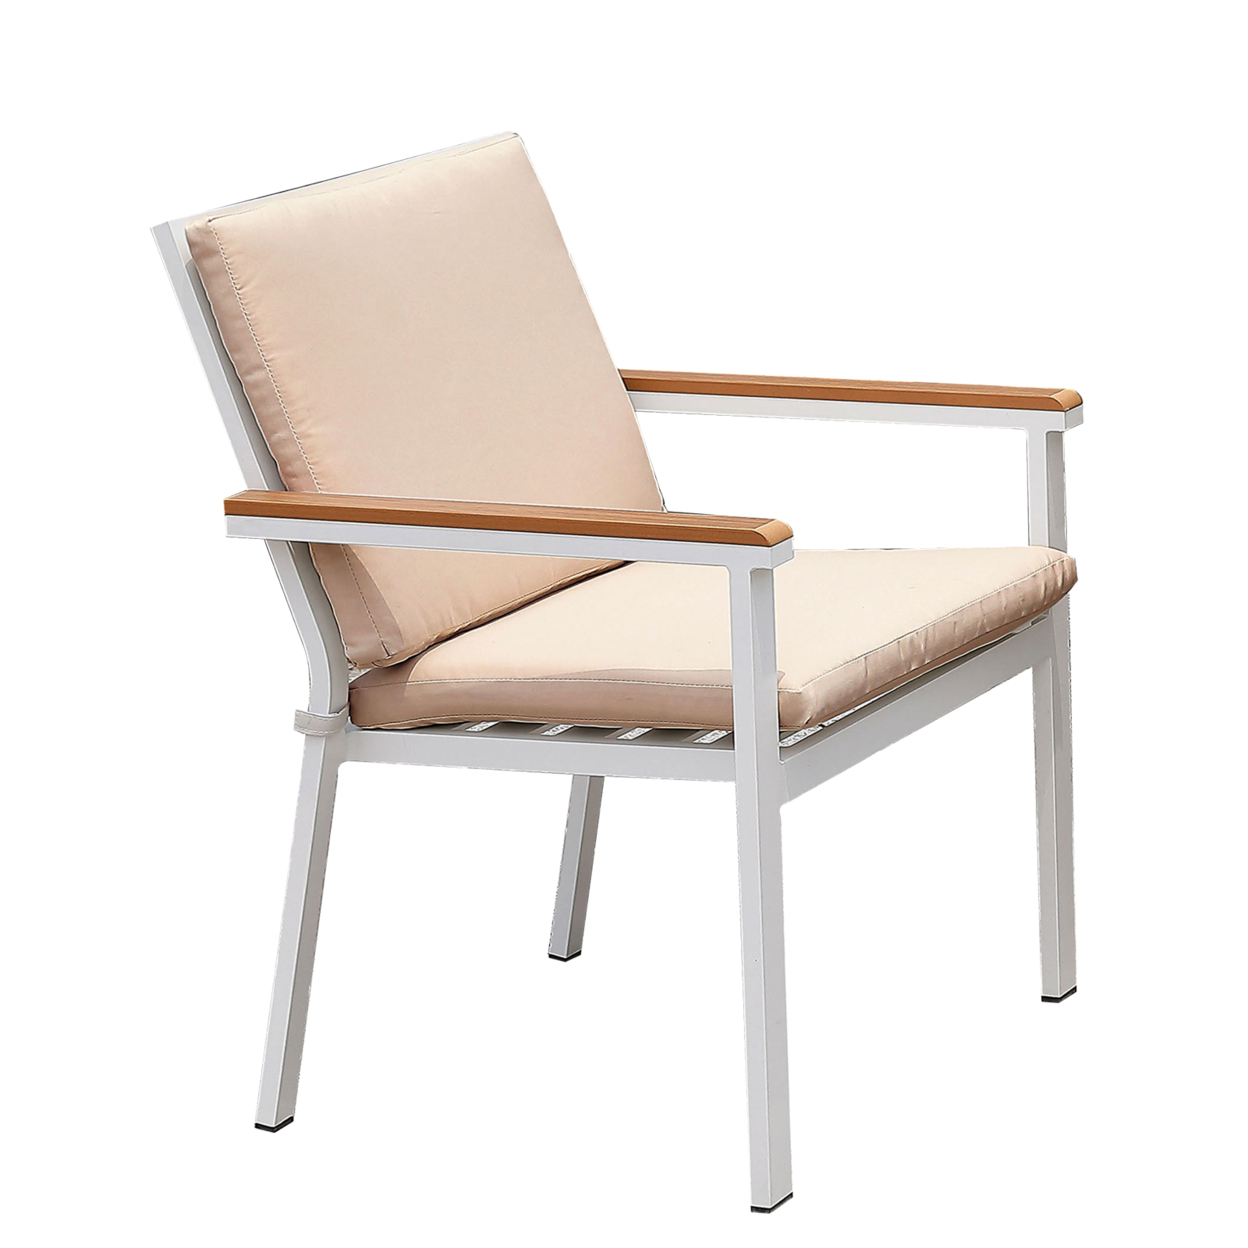 27 Inch Aluminum Frame Arm Chair, Outdoor, Cushions, Set Of 2, White, Pink- Saltoro Sherpi